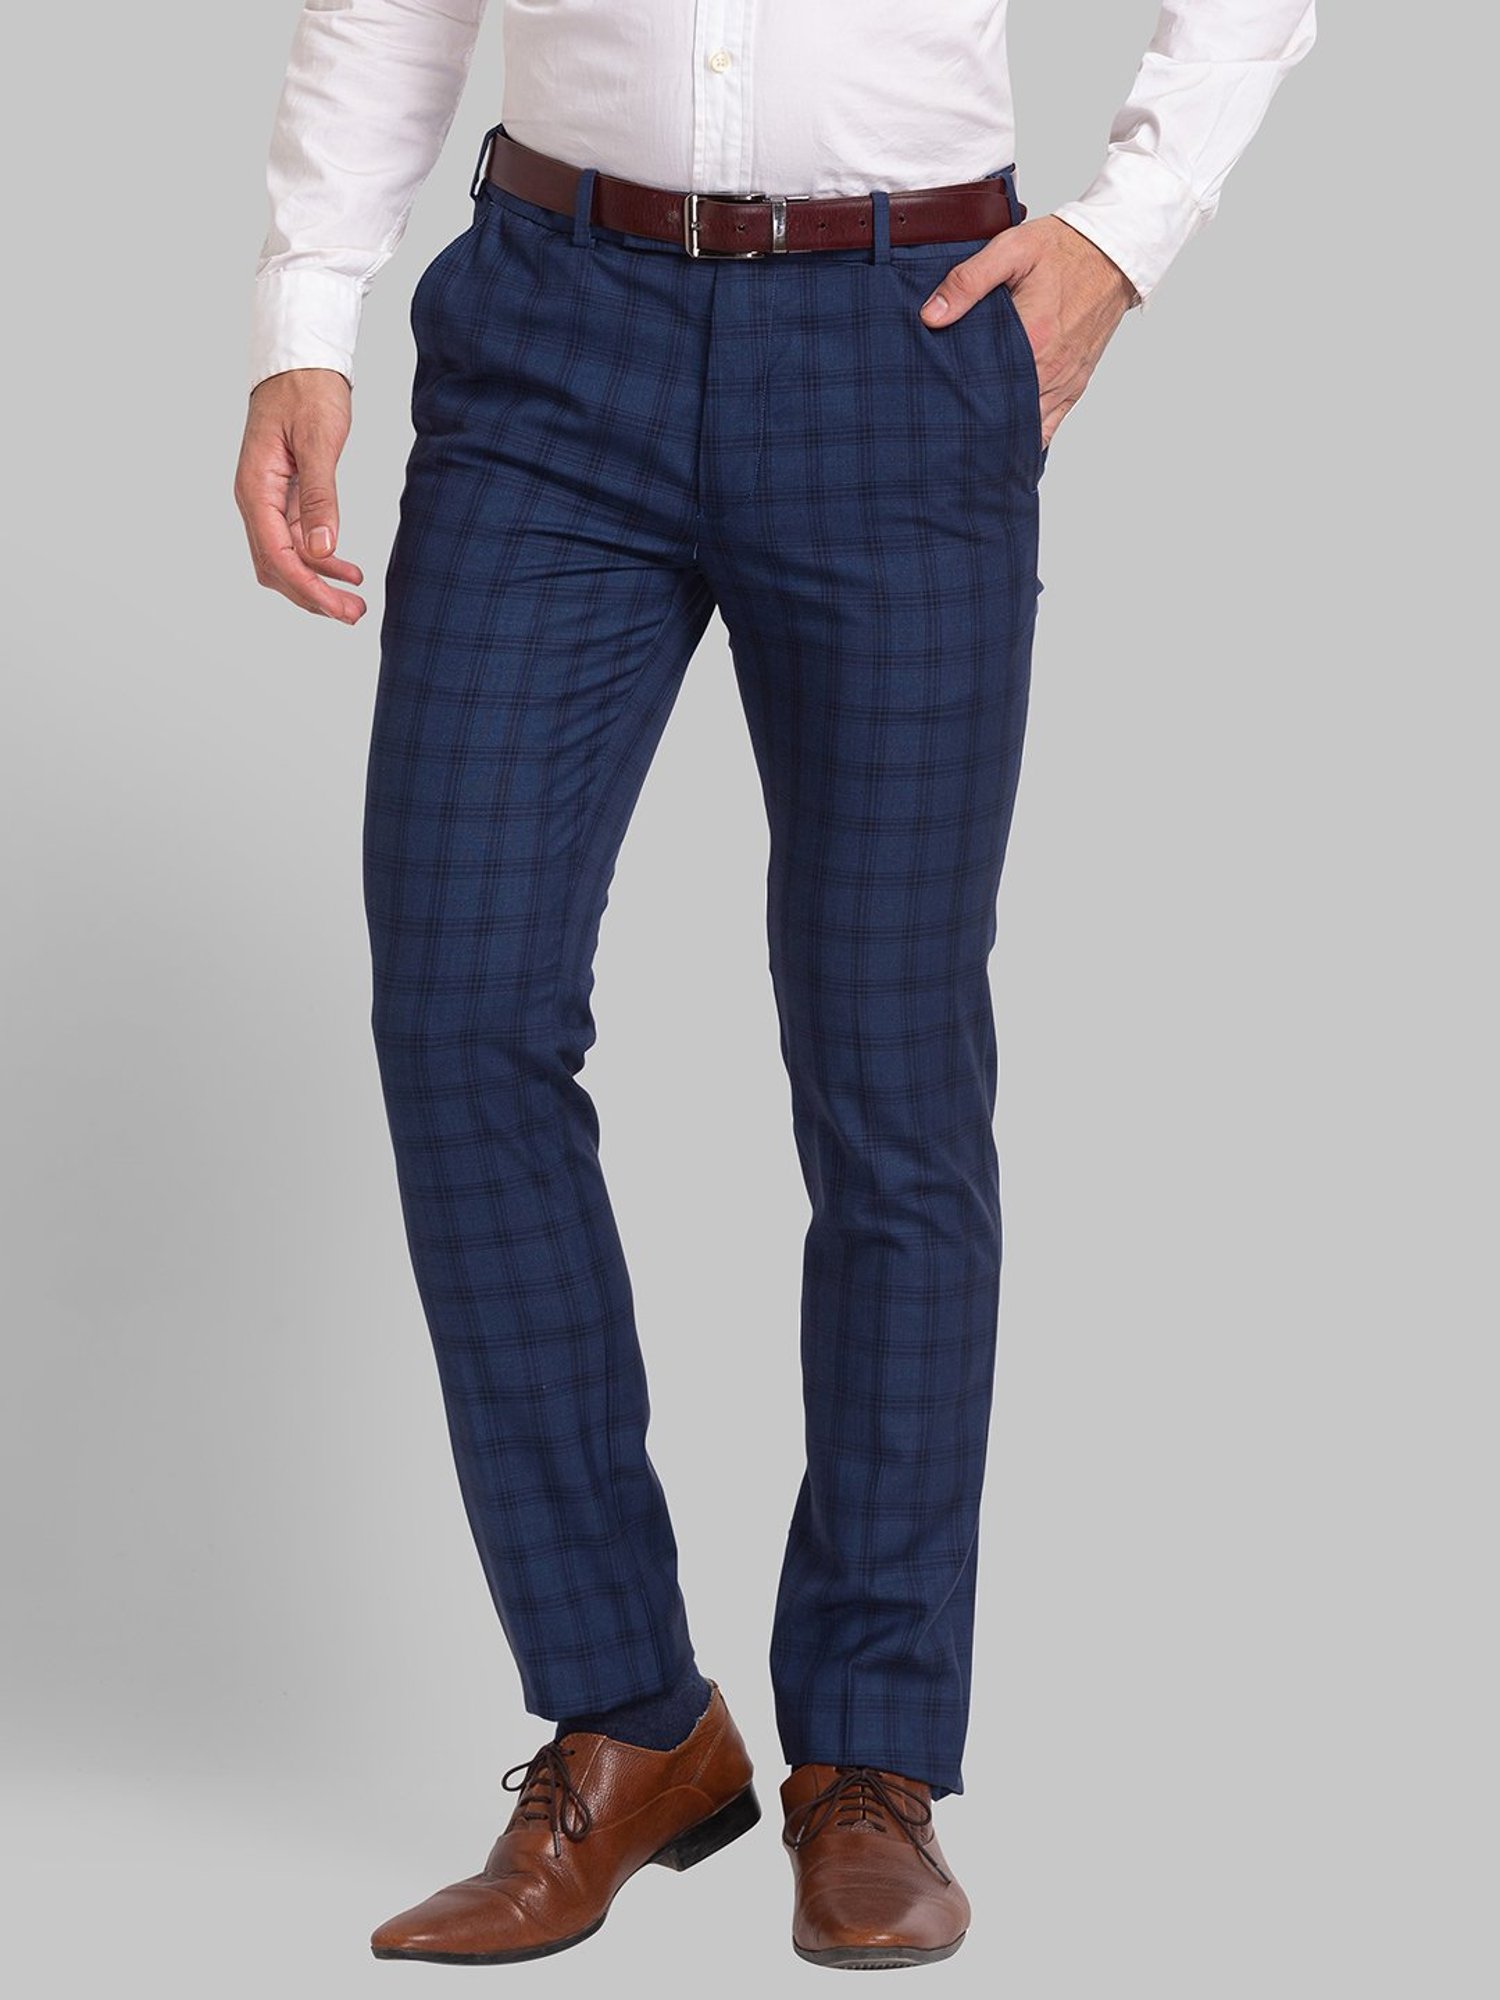 Buy Men Navy Check Slim Fit Formal Trousers Online  734753  Peter England